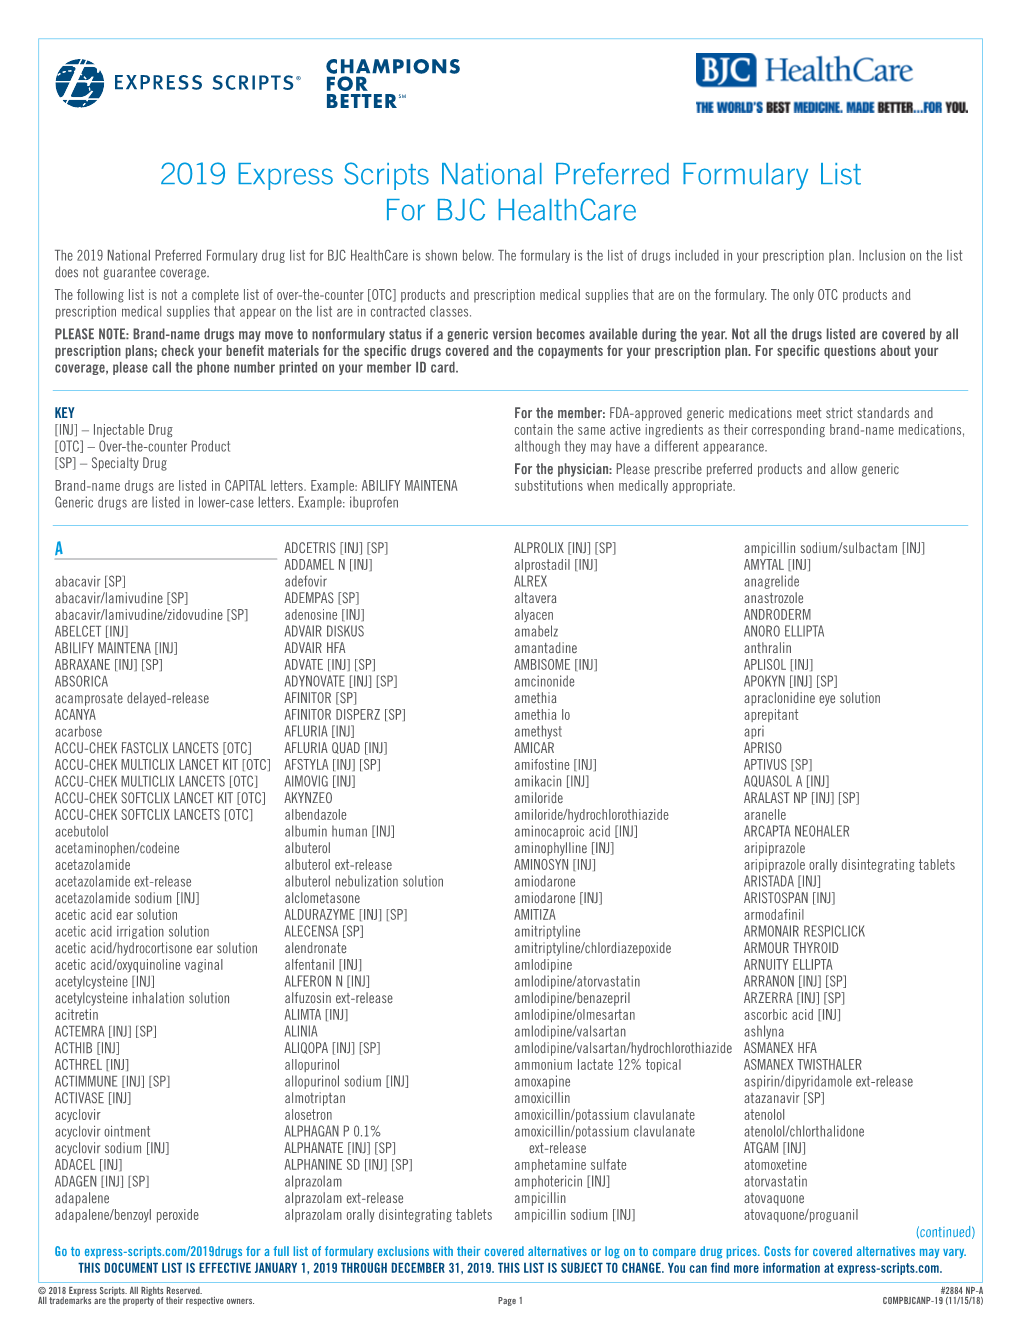 2019 National Preferred Formulary List for BJC Healthcare